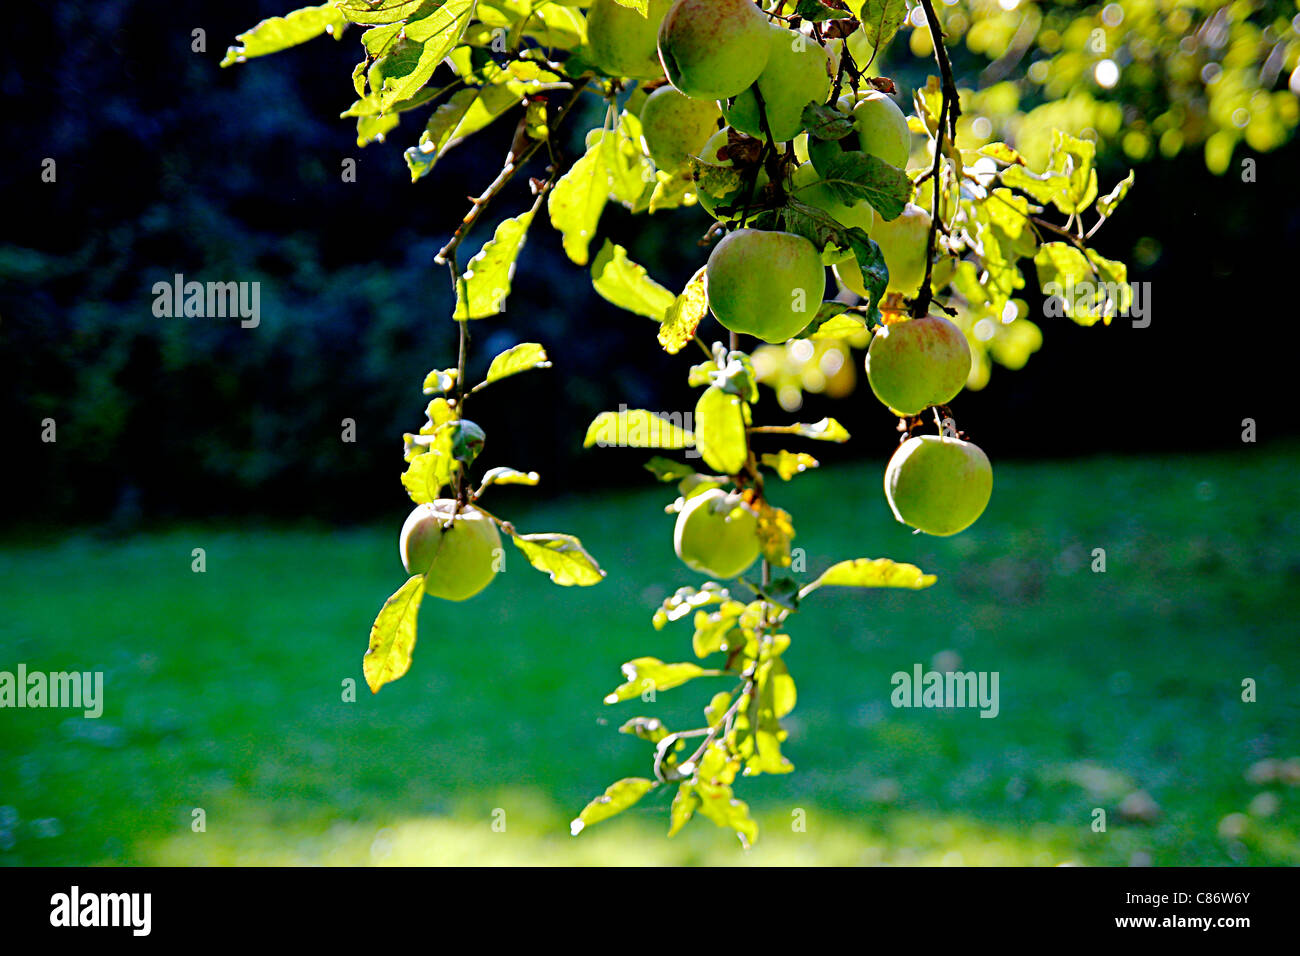 Apple in autumn sun representing harvest time Stock Photo